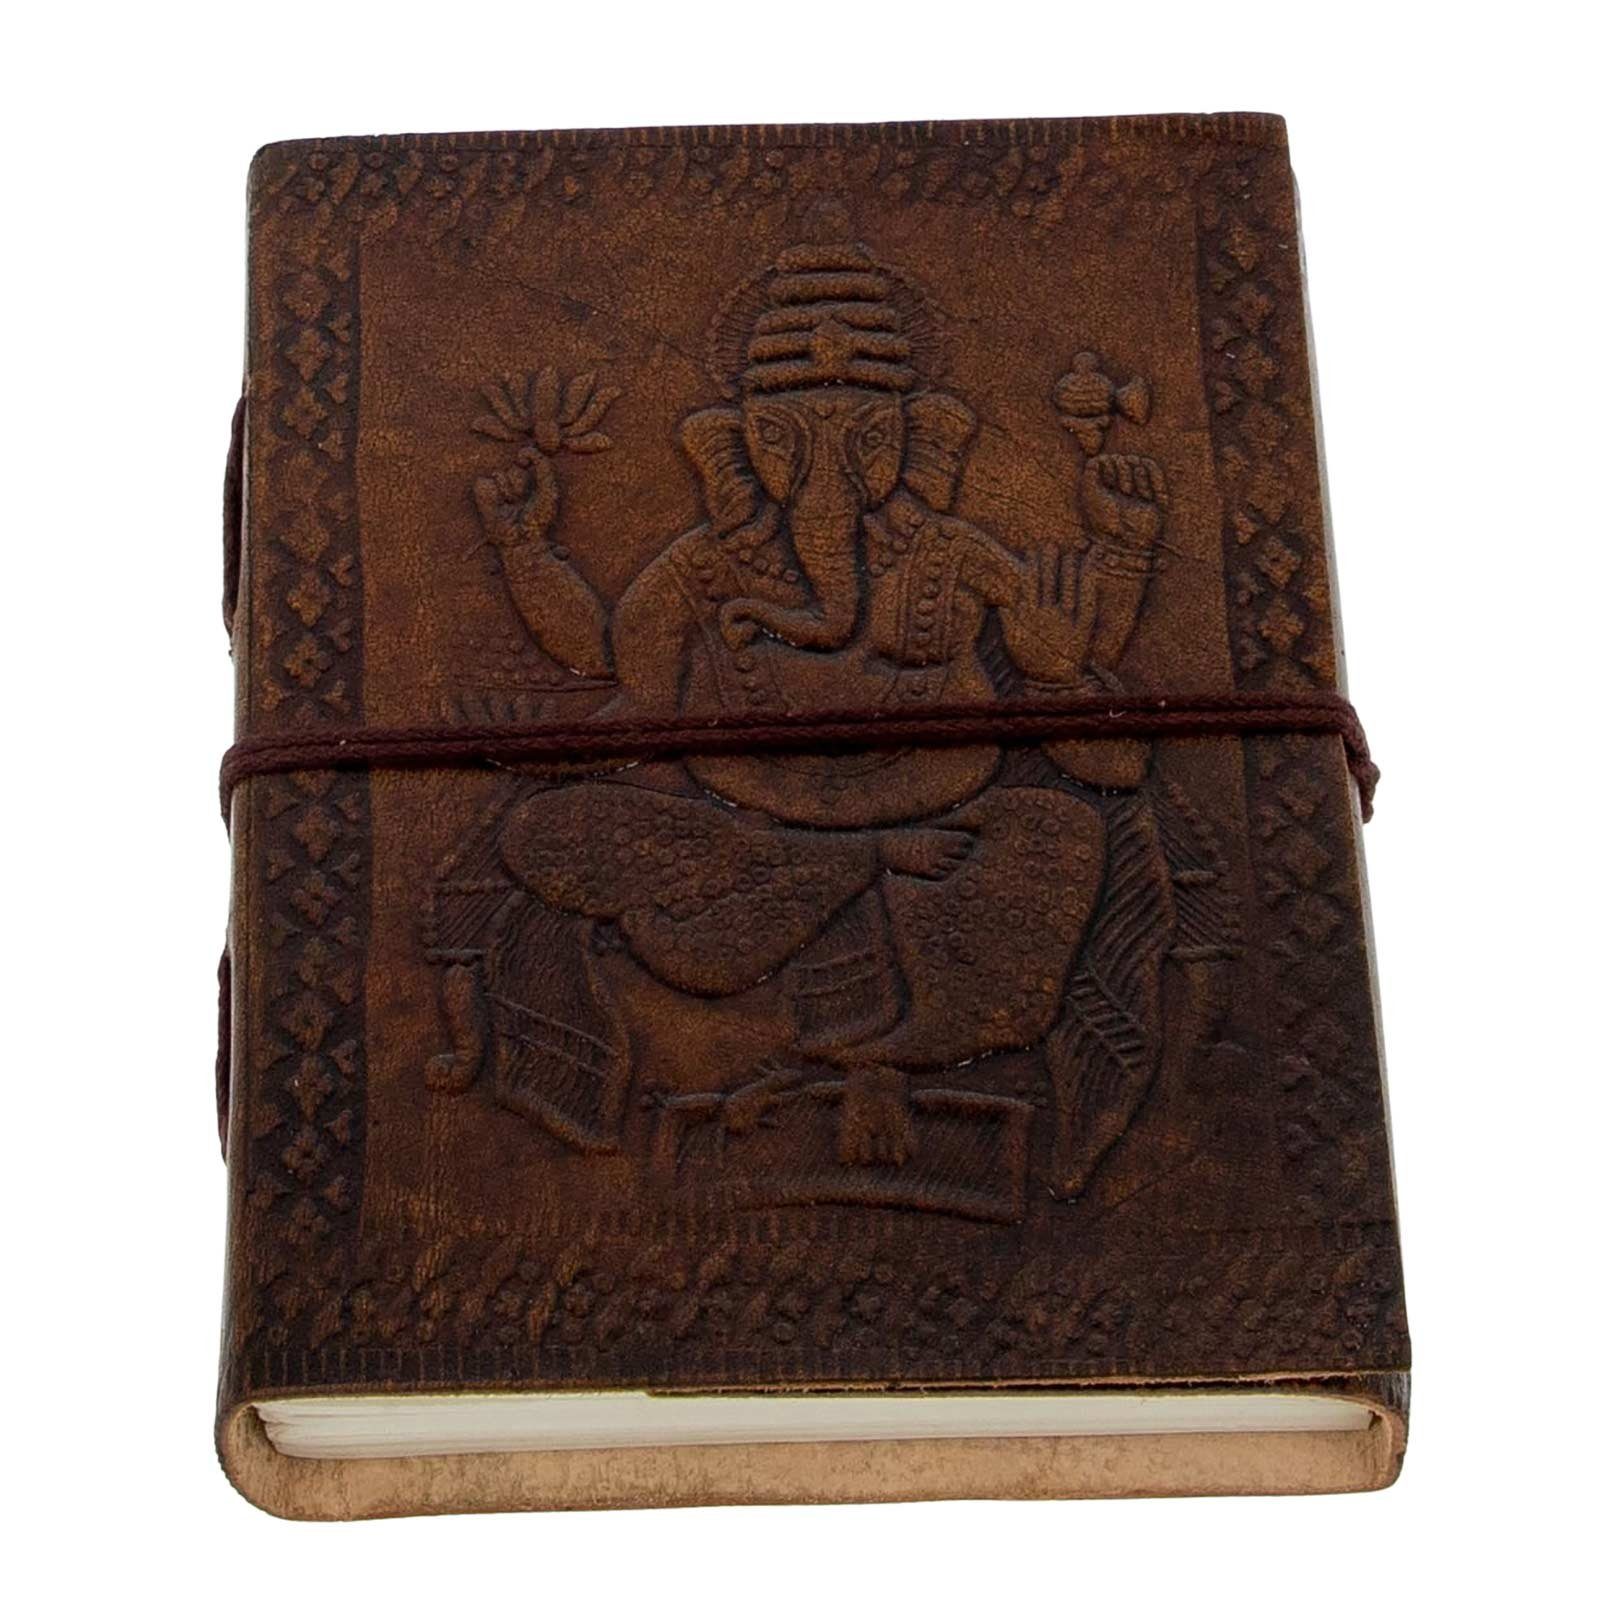 Tagebuch MAGIE Notizbuch Ganesha KUNST 11,5x15cm UND Lord Tagebuch Leder handgefertigt